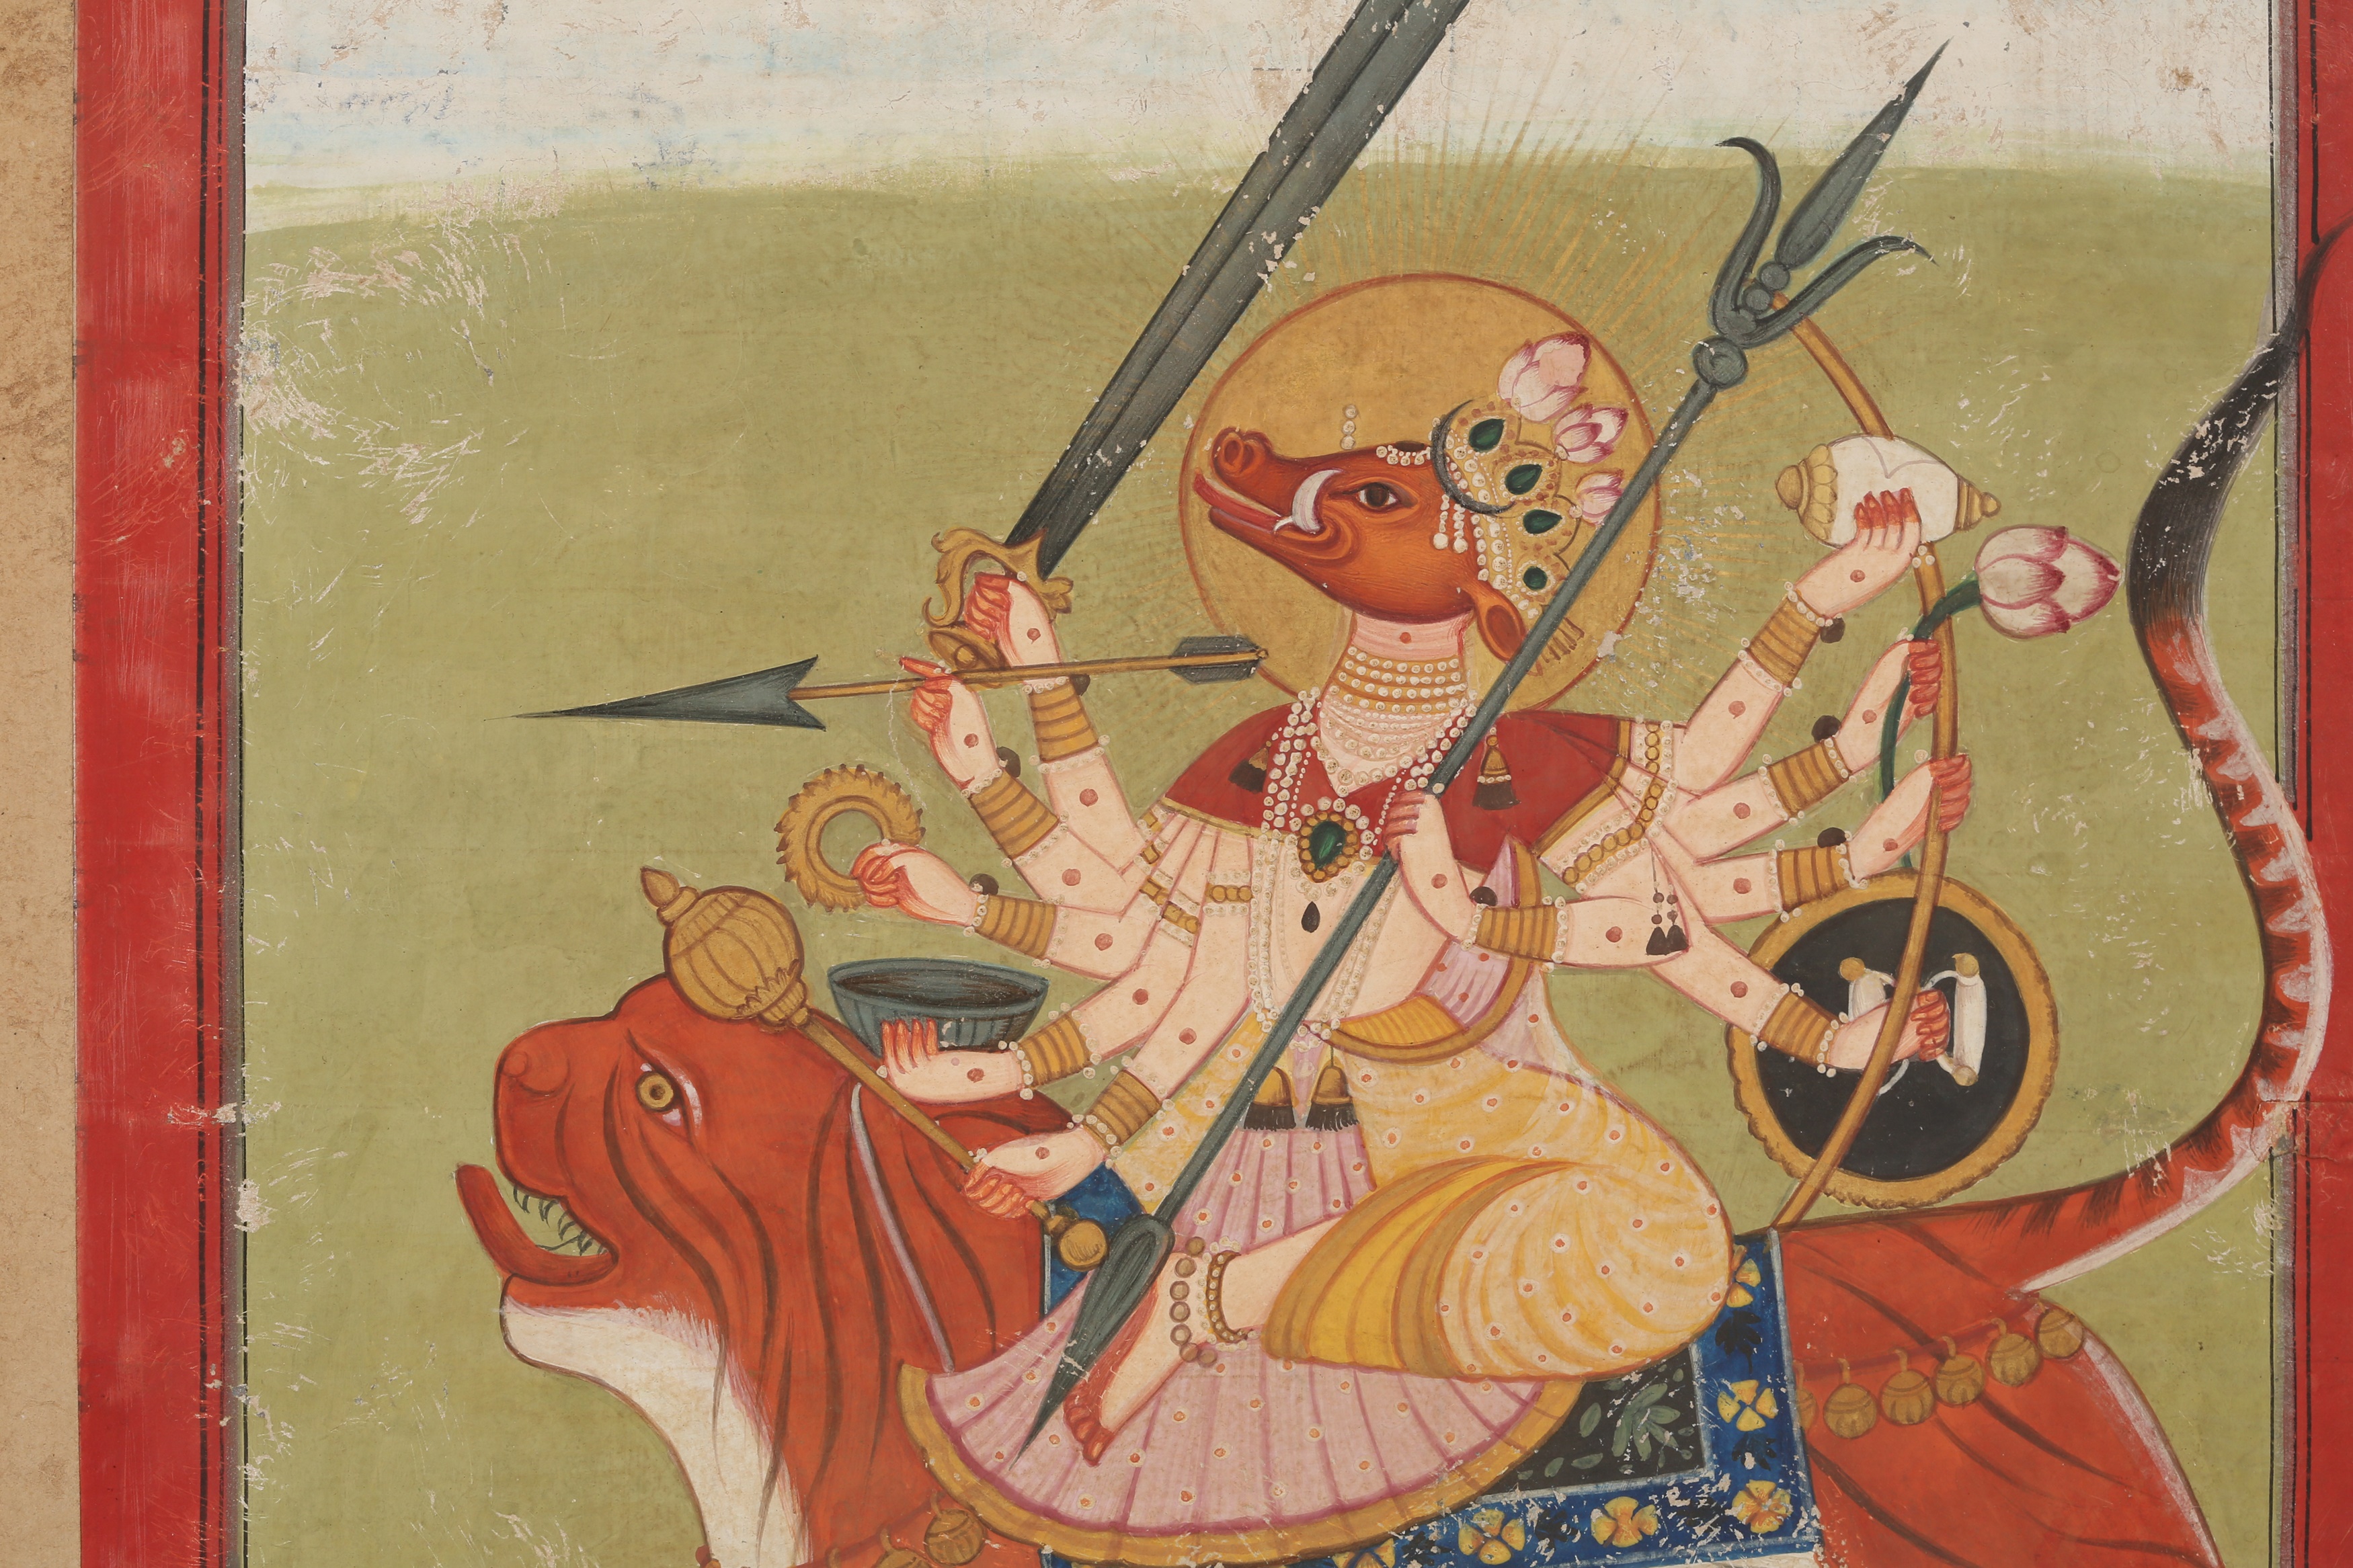 THE HINDU GODDESS DURGA SEATED ON HER MOUNT (VAHANA) - Image 3 of 5